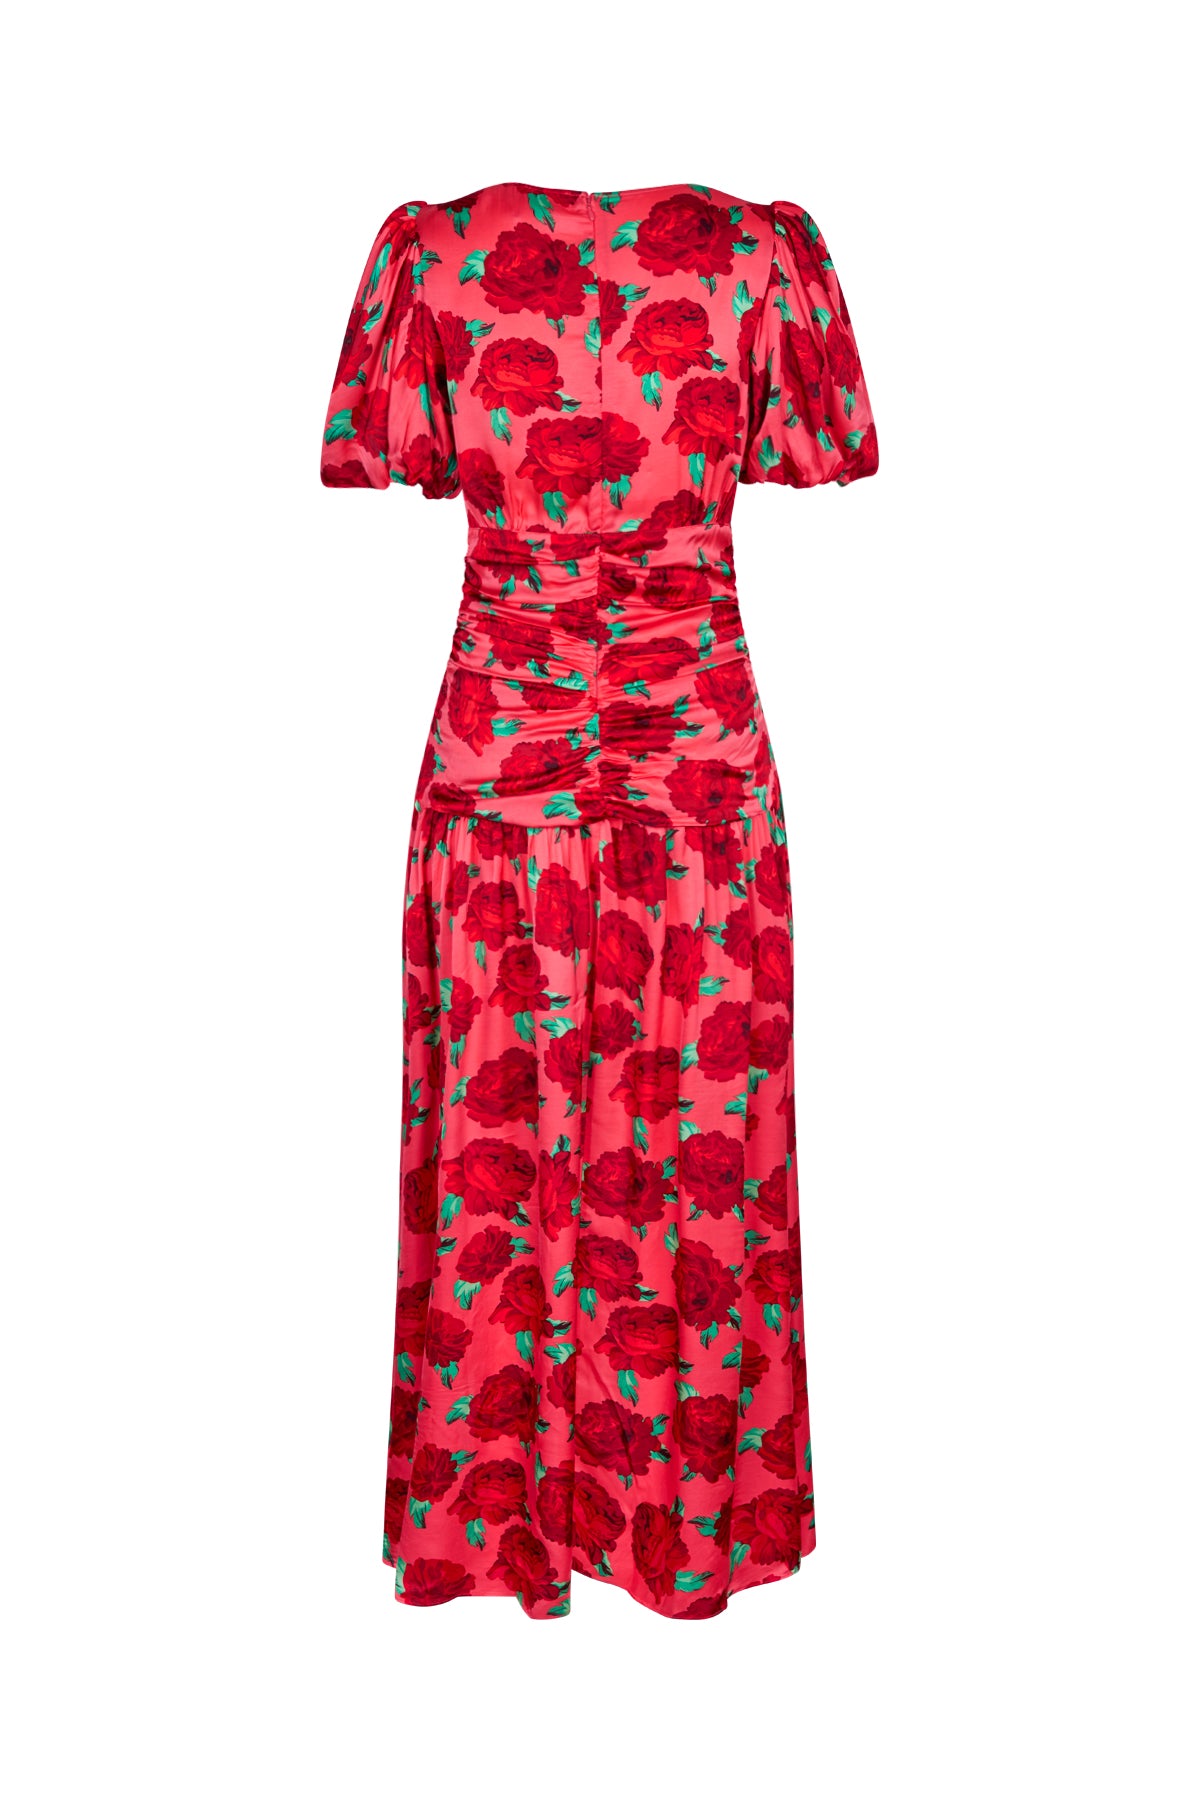 CRAS Elaine Dress Dress 8019 Coral Roses